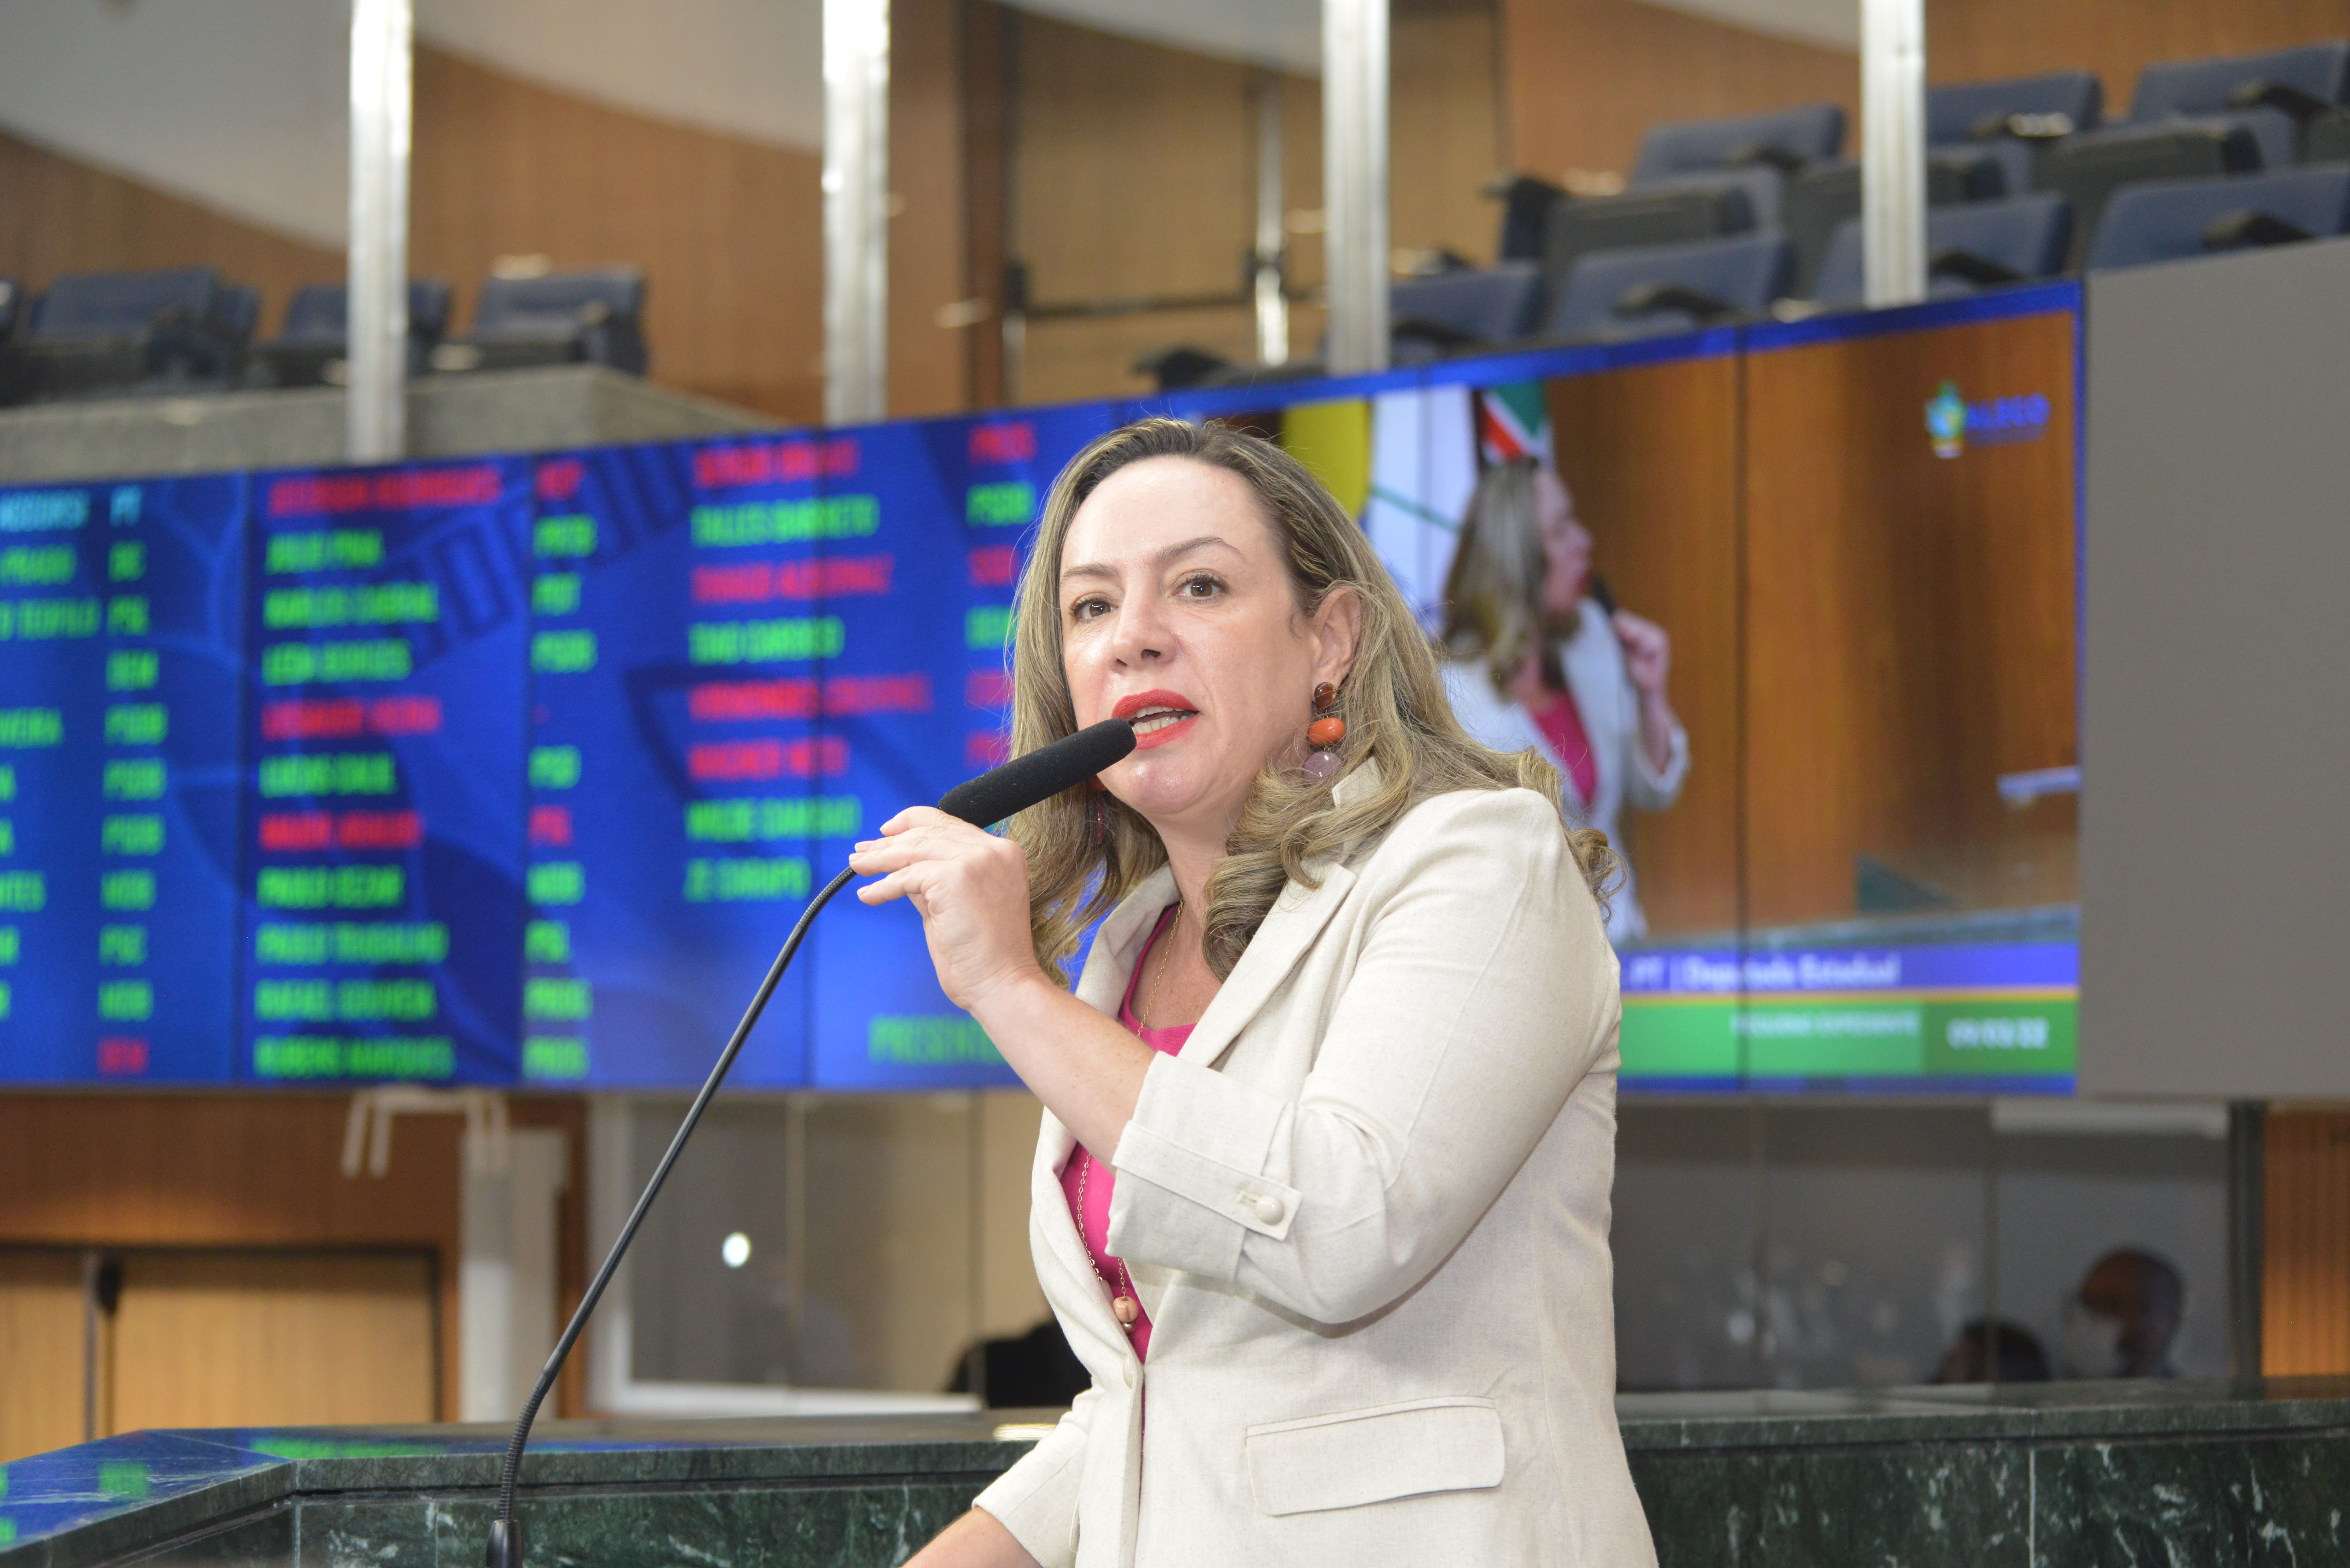 Deputada Estadual Delegada Adriana Accorsi discursa na tribuna da Assembleia Legislativa de Goiás. (Reprodução)